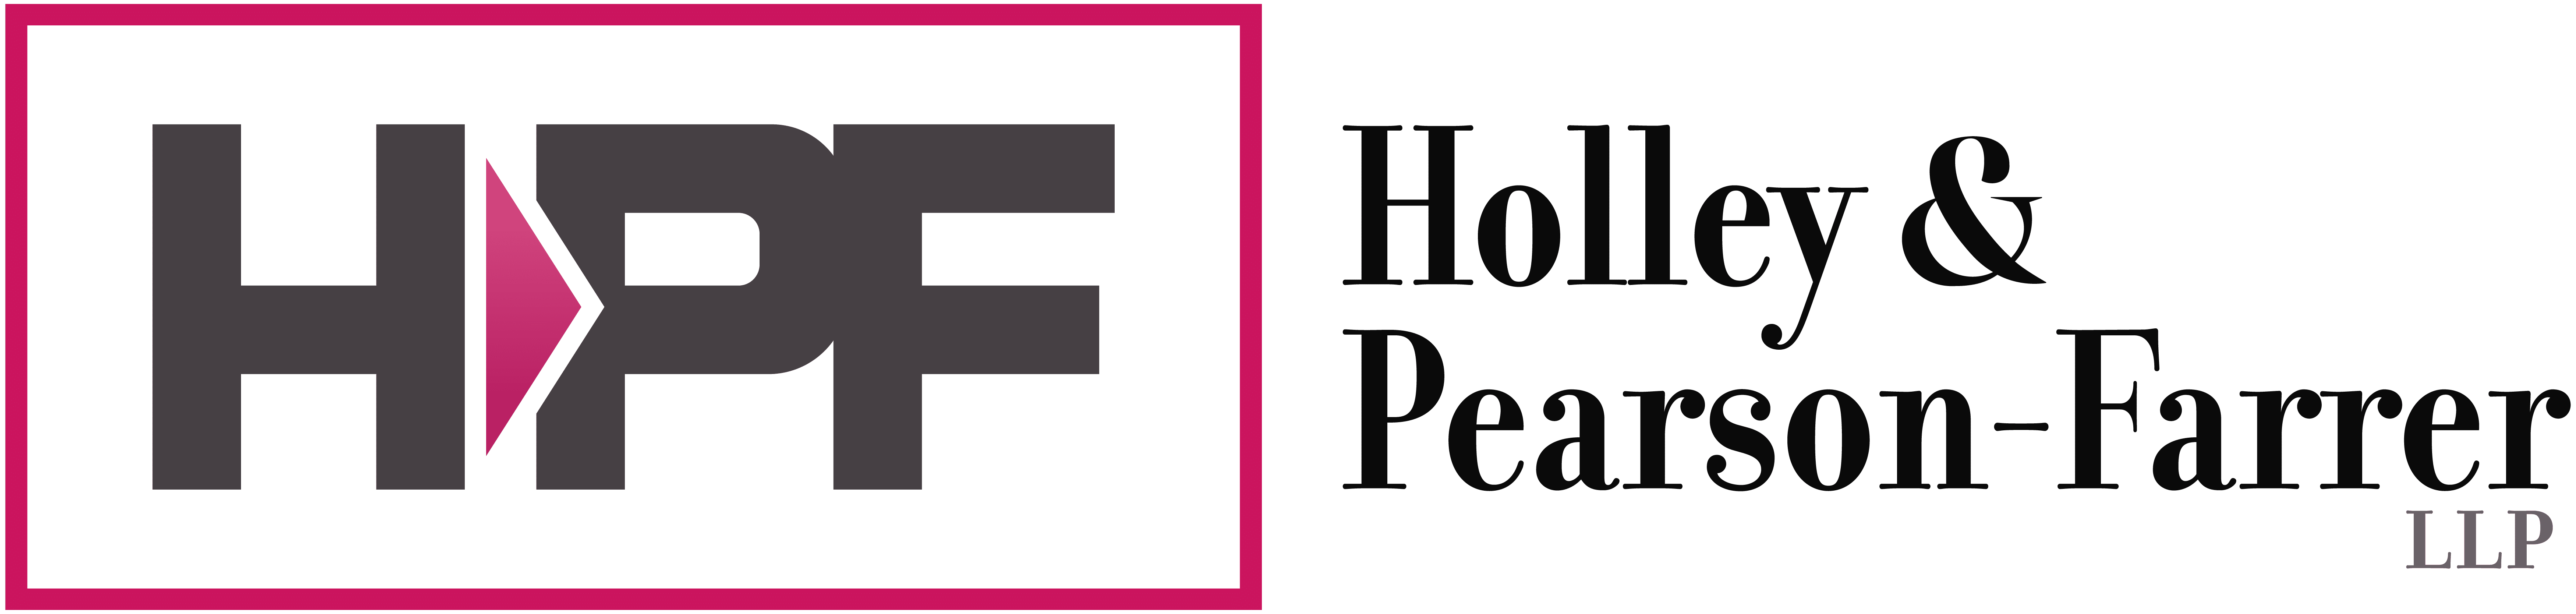 Holley & Pearson-Farrer LLP logo